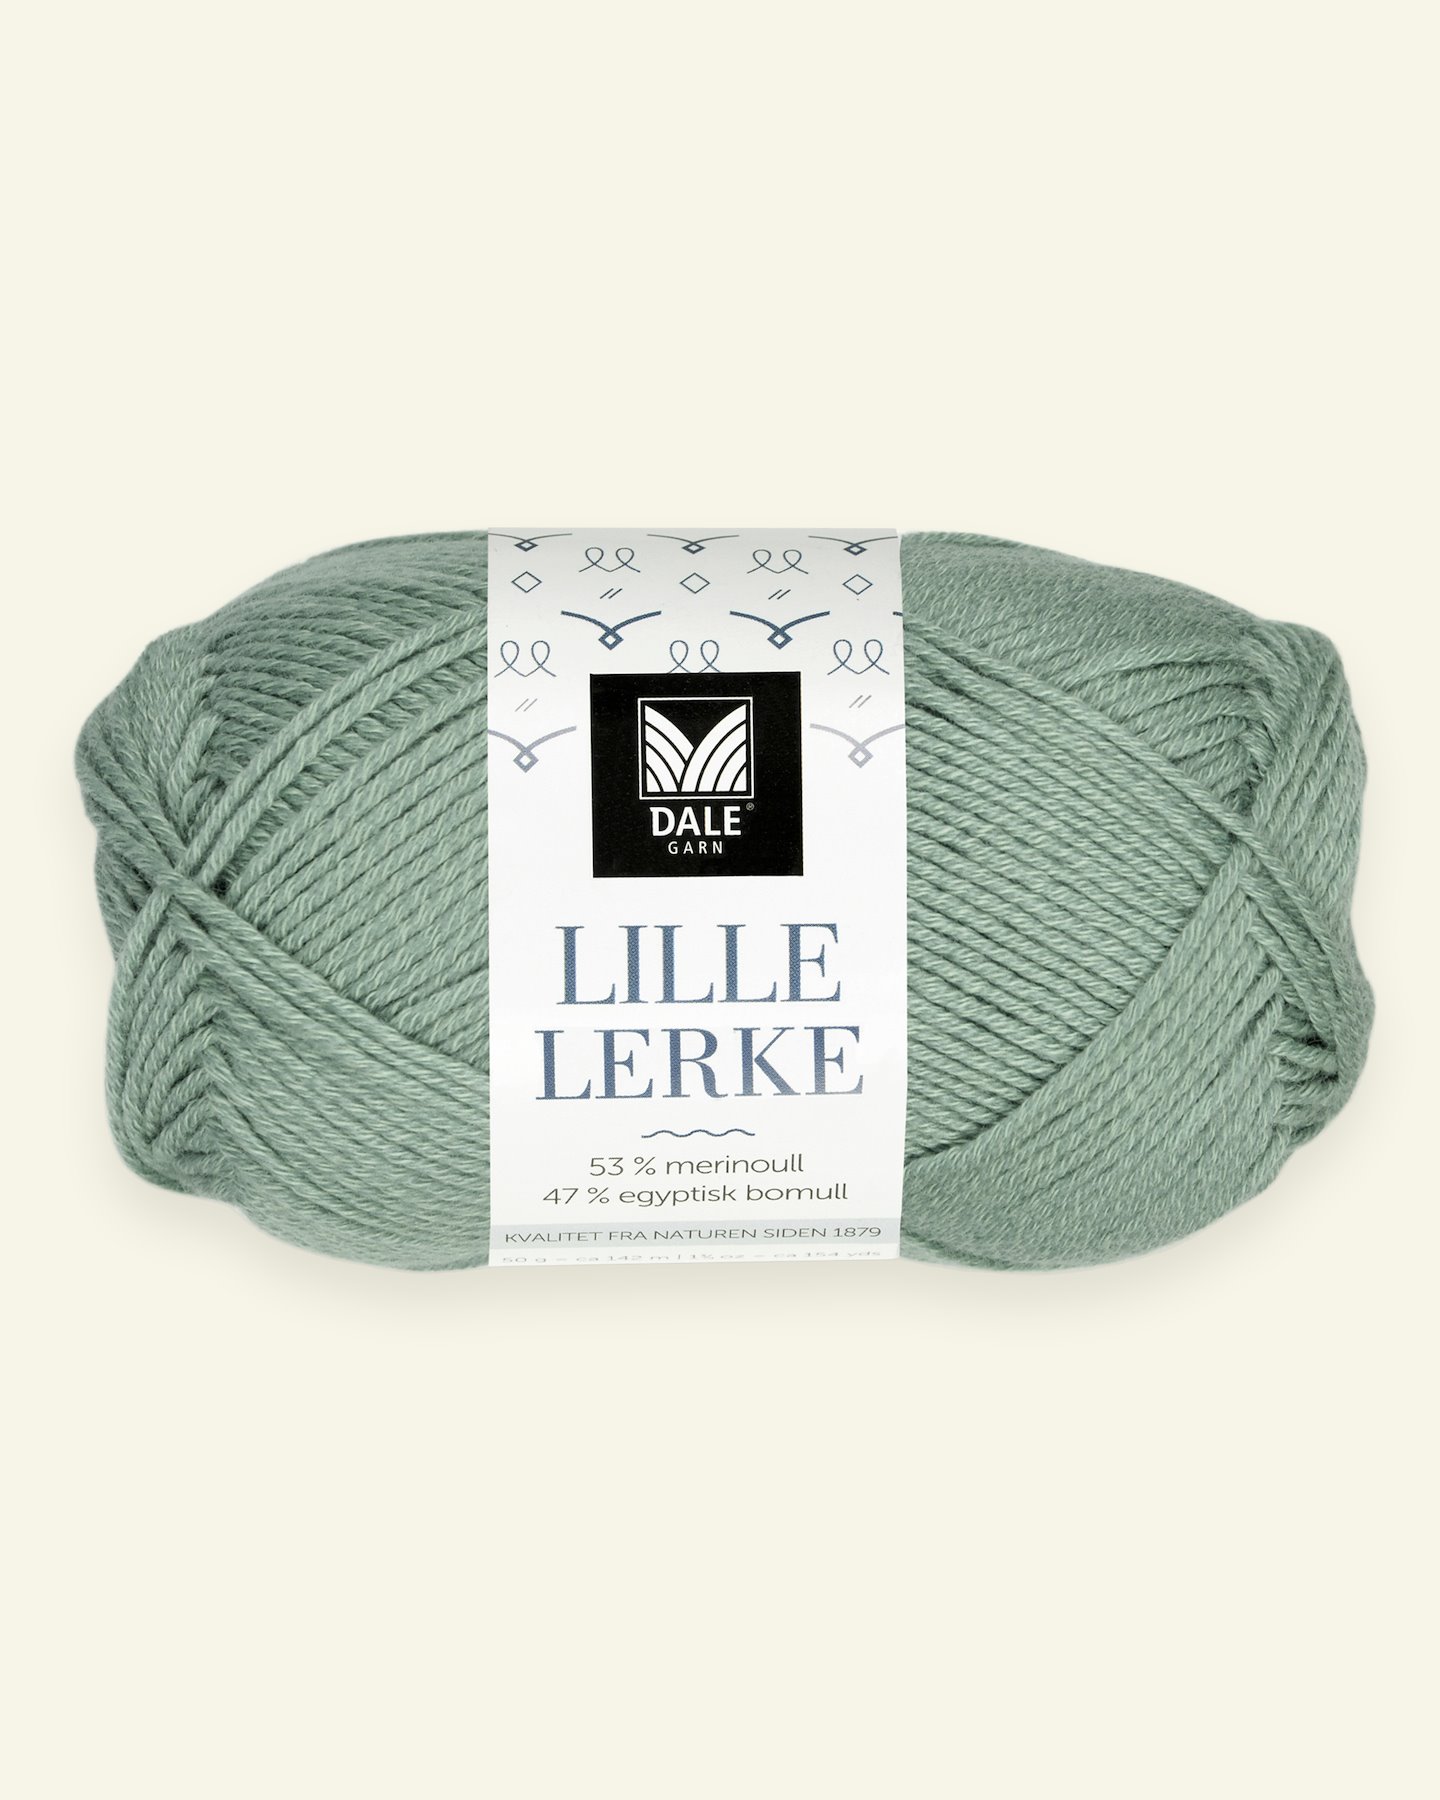 Dale Garn, merino/cotton yarn "Lille Lerke", jade green (8101) 90000404_pack